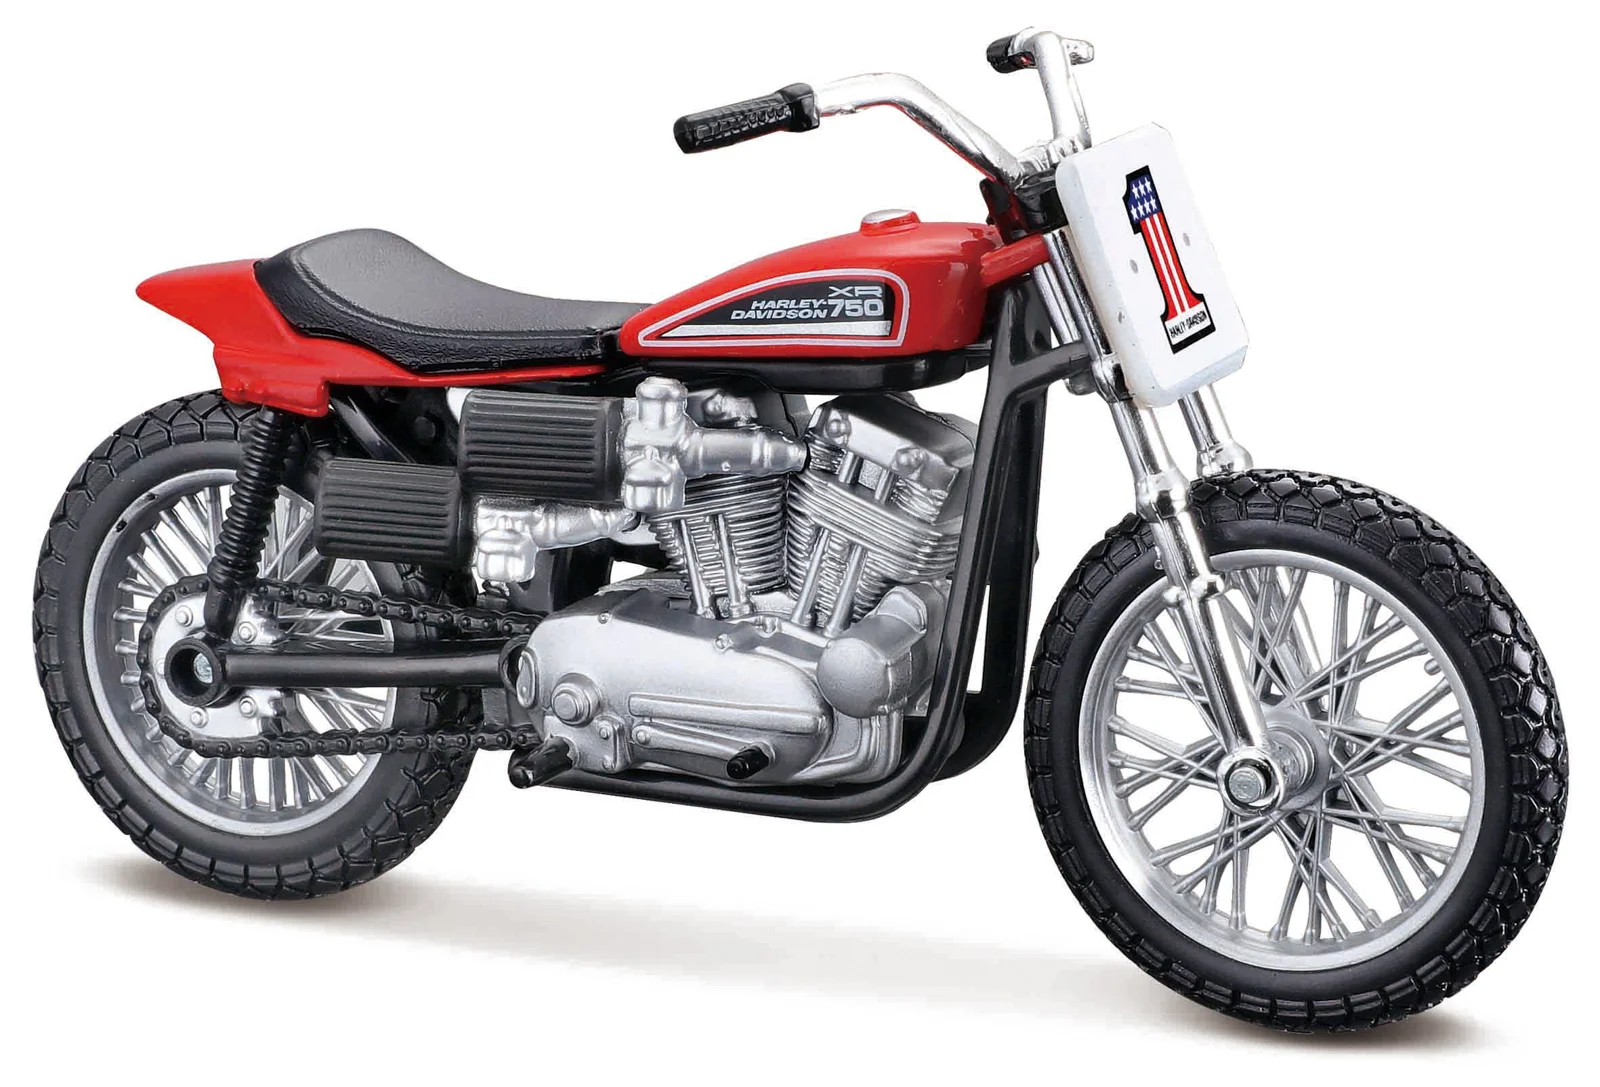 Maisto - HD - Motocykl - 1972 XR750, blister box, 1:18